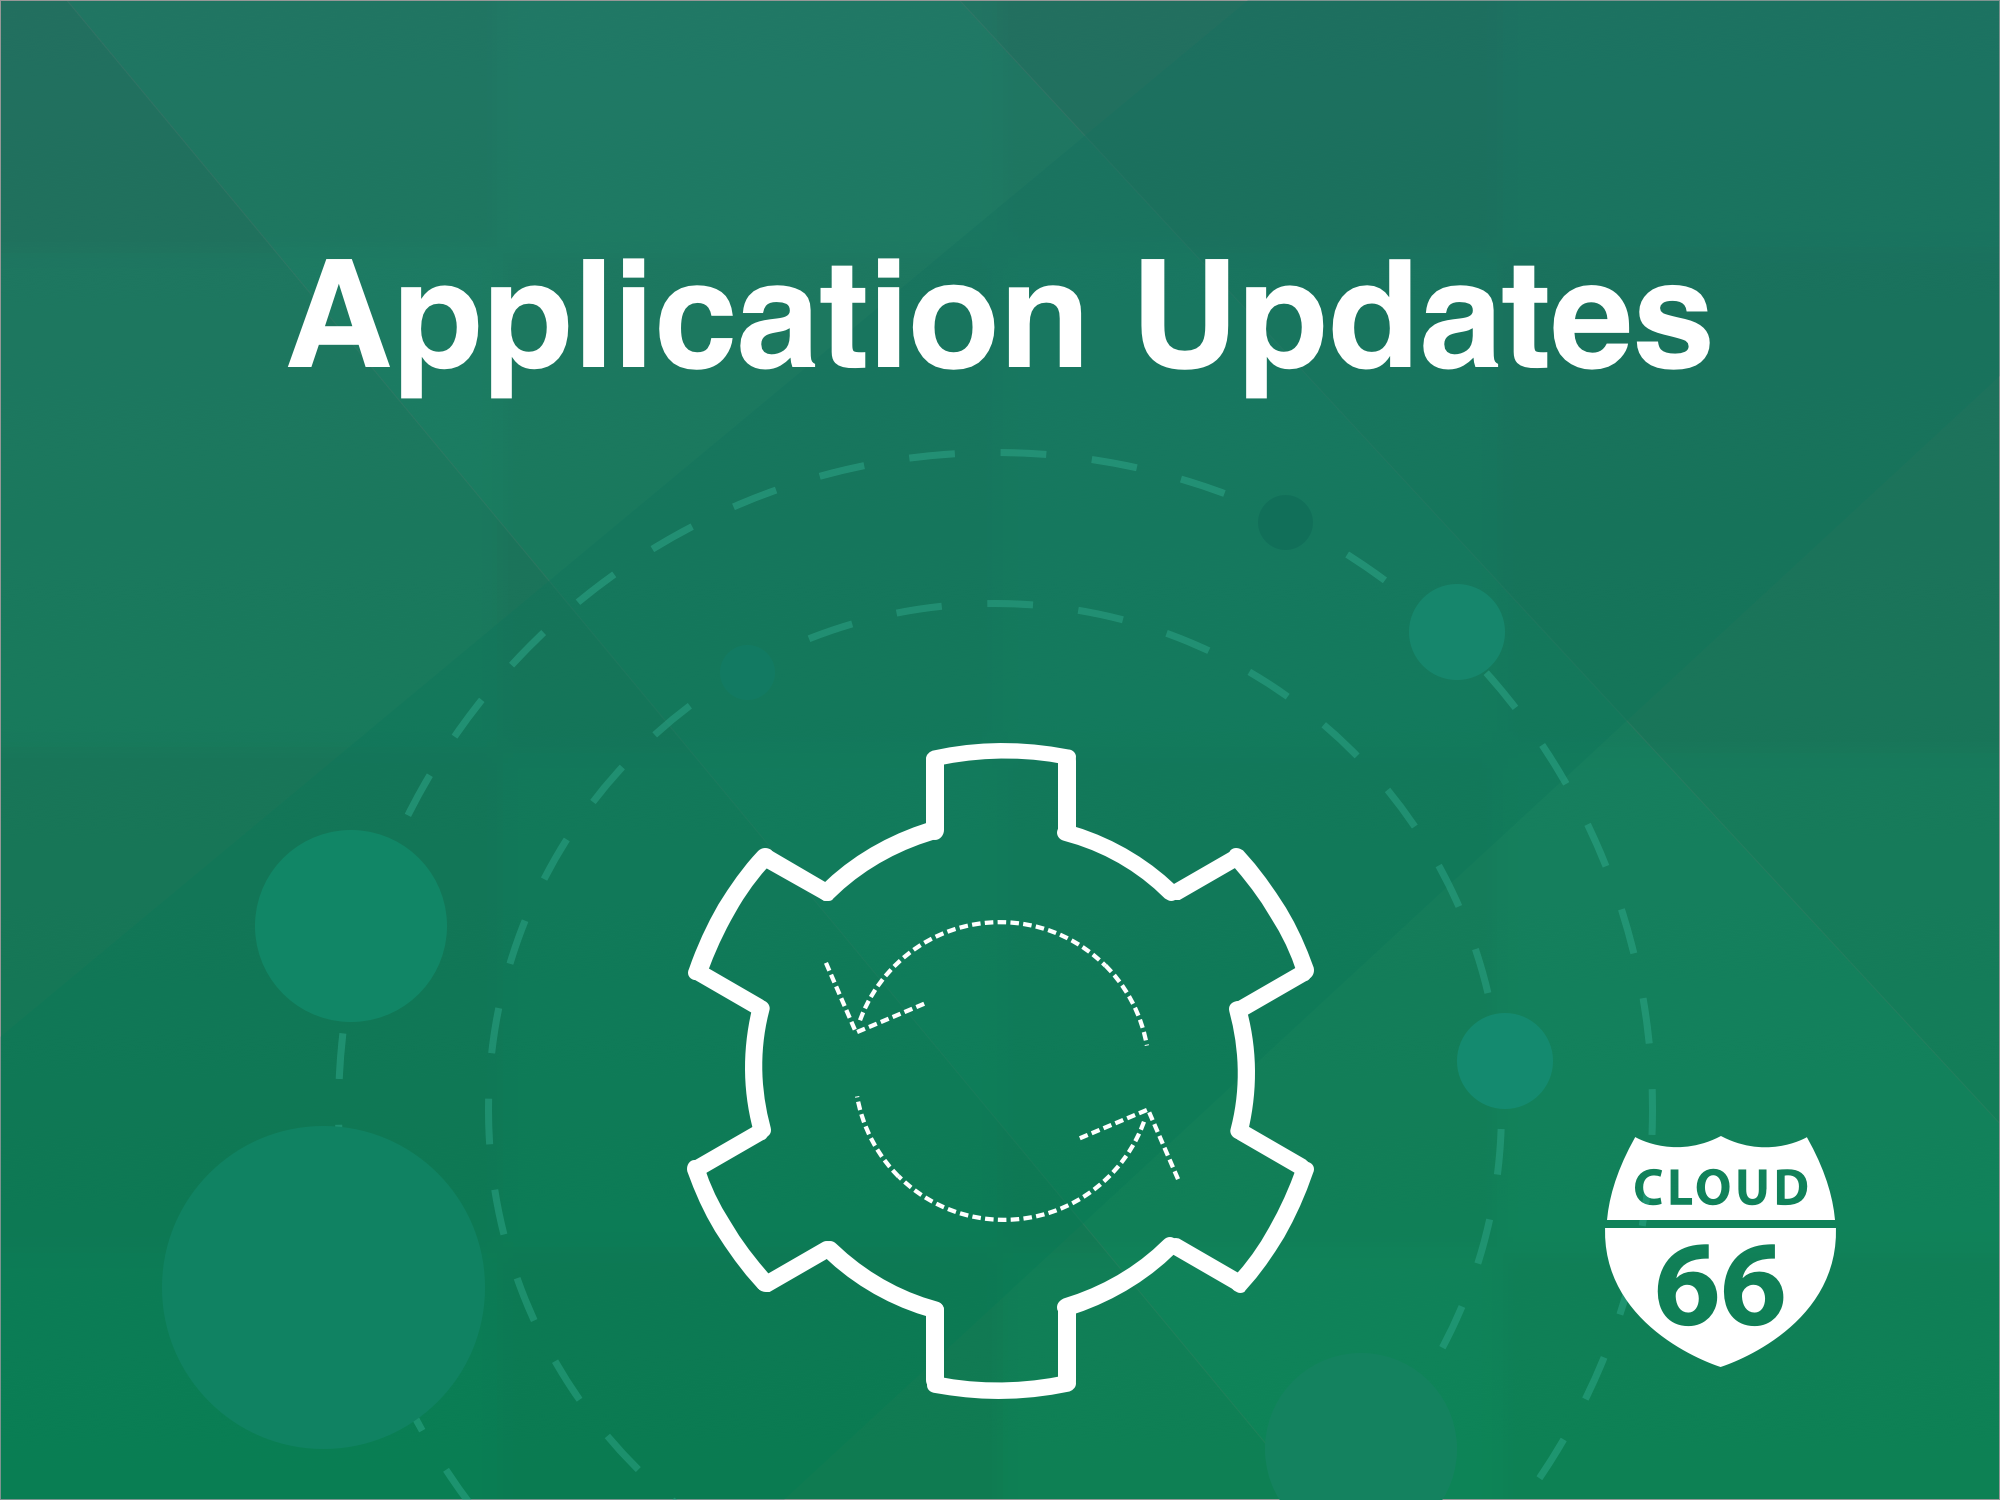 Cloud 66 Application Updates Feature.